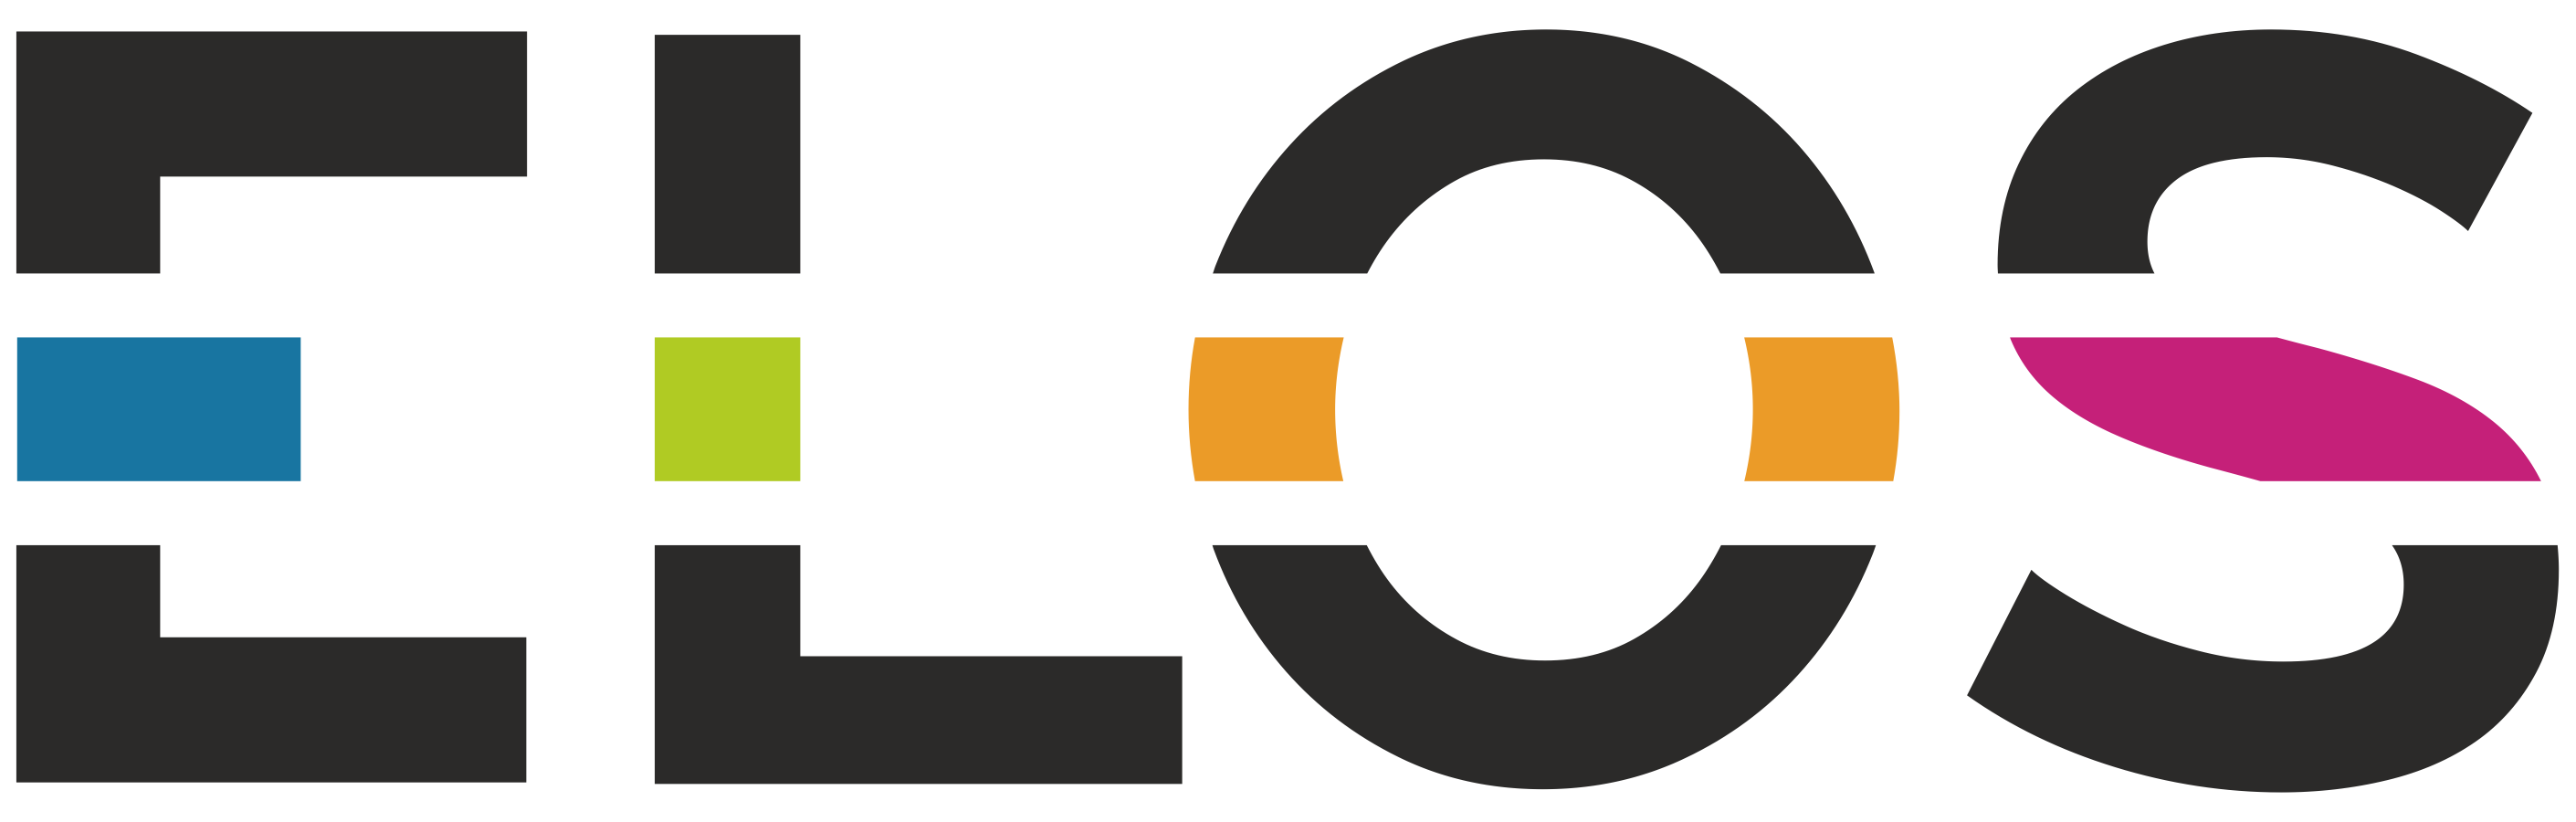 Logo-ELOS-Large-Canavas